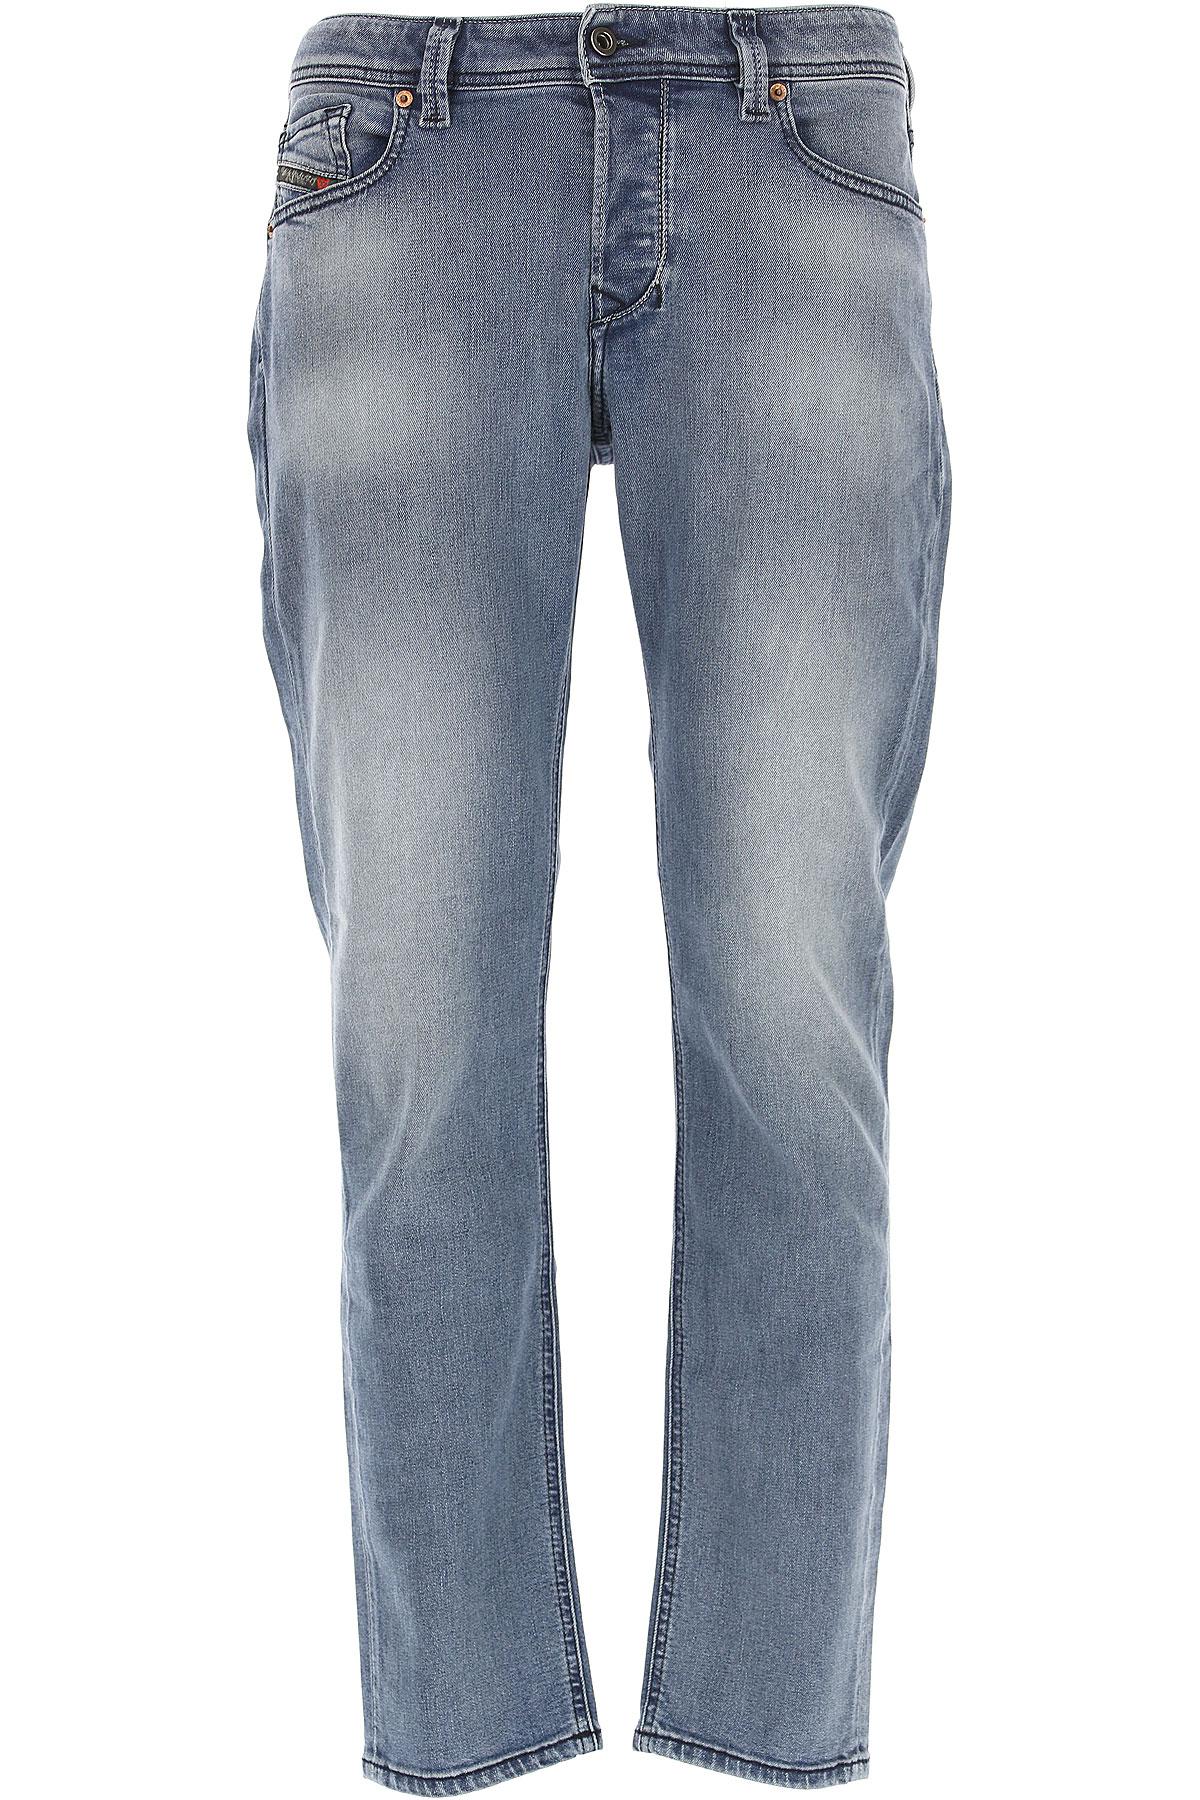 DIESEL Denim Jeans On Sale In Outlet in Blue for Men - Save 47% - Lyst